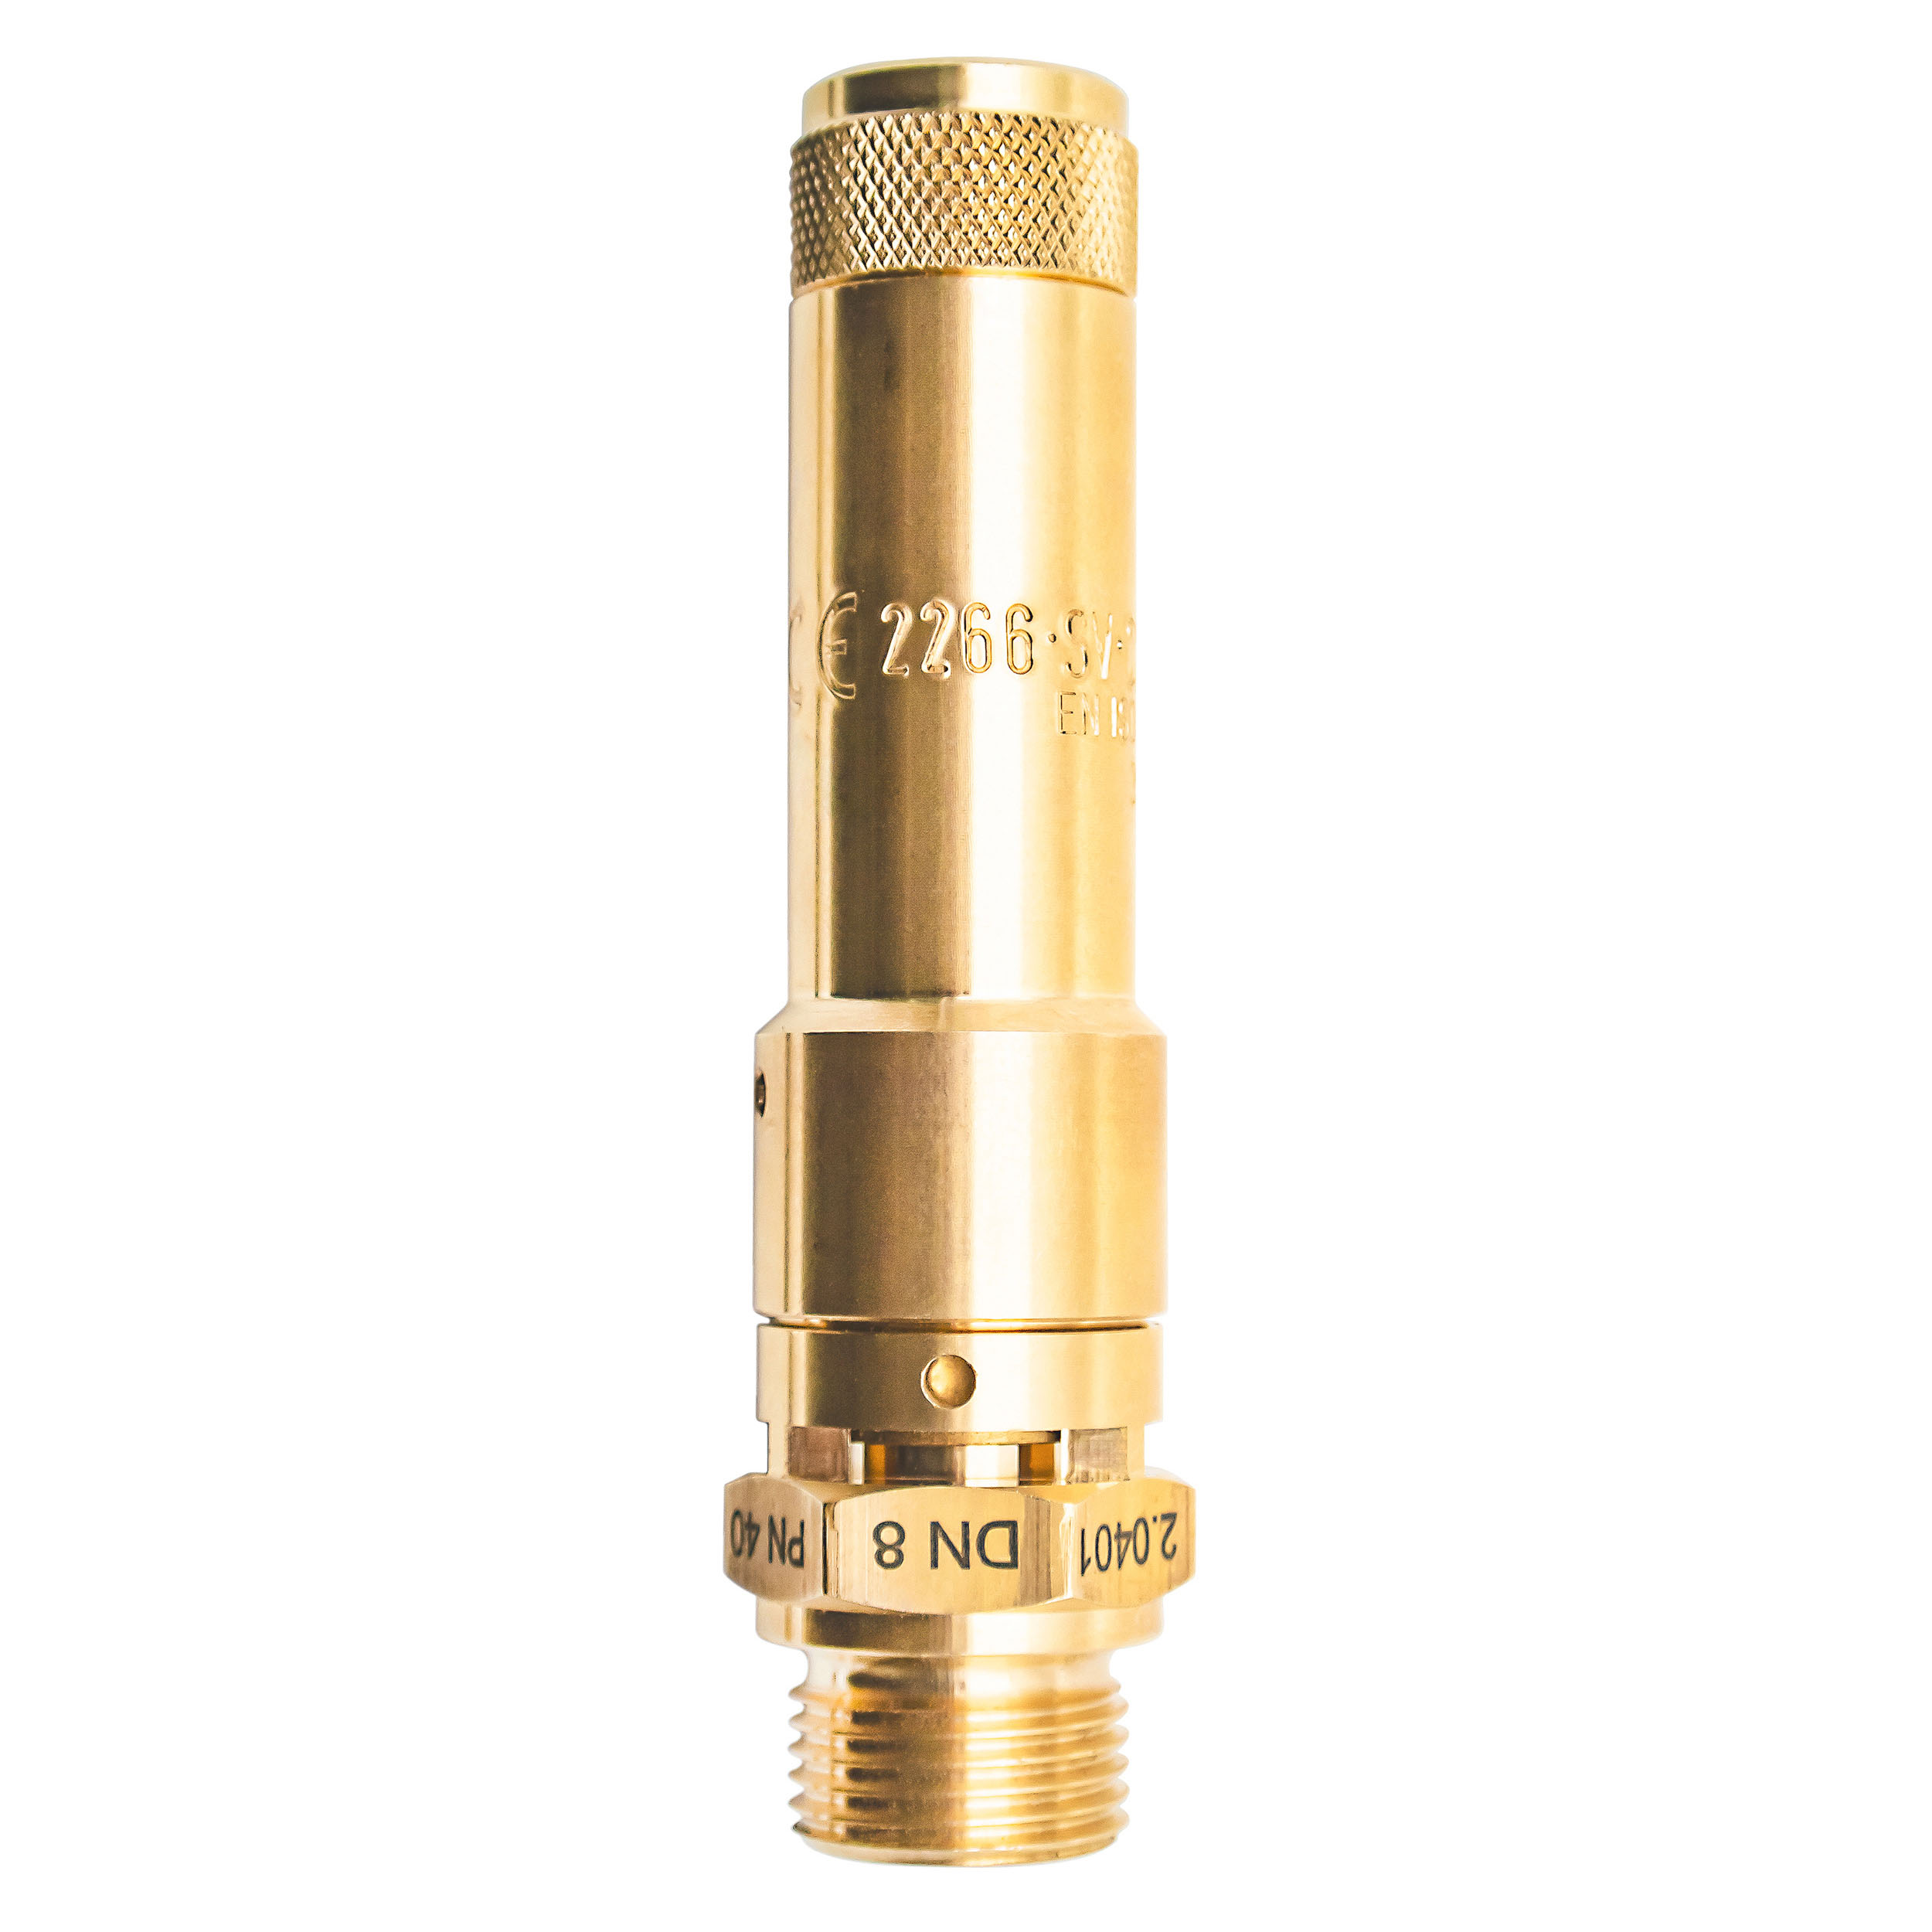 Component-tested safety valve DN 8, G¼, pressure: 27.1-40 bar